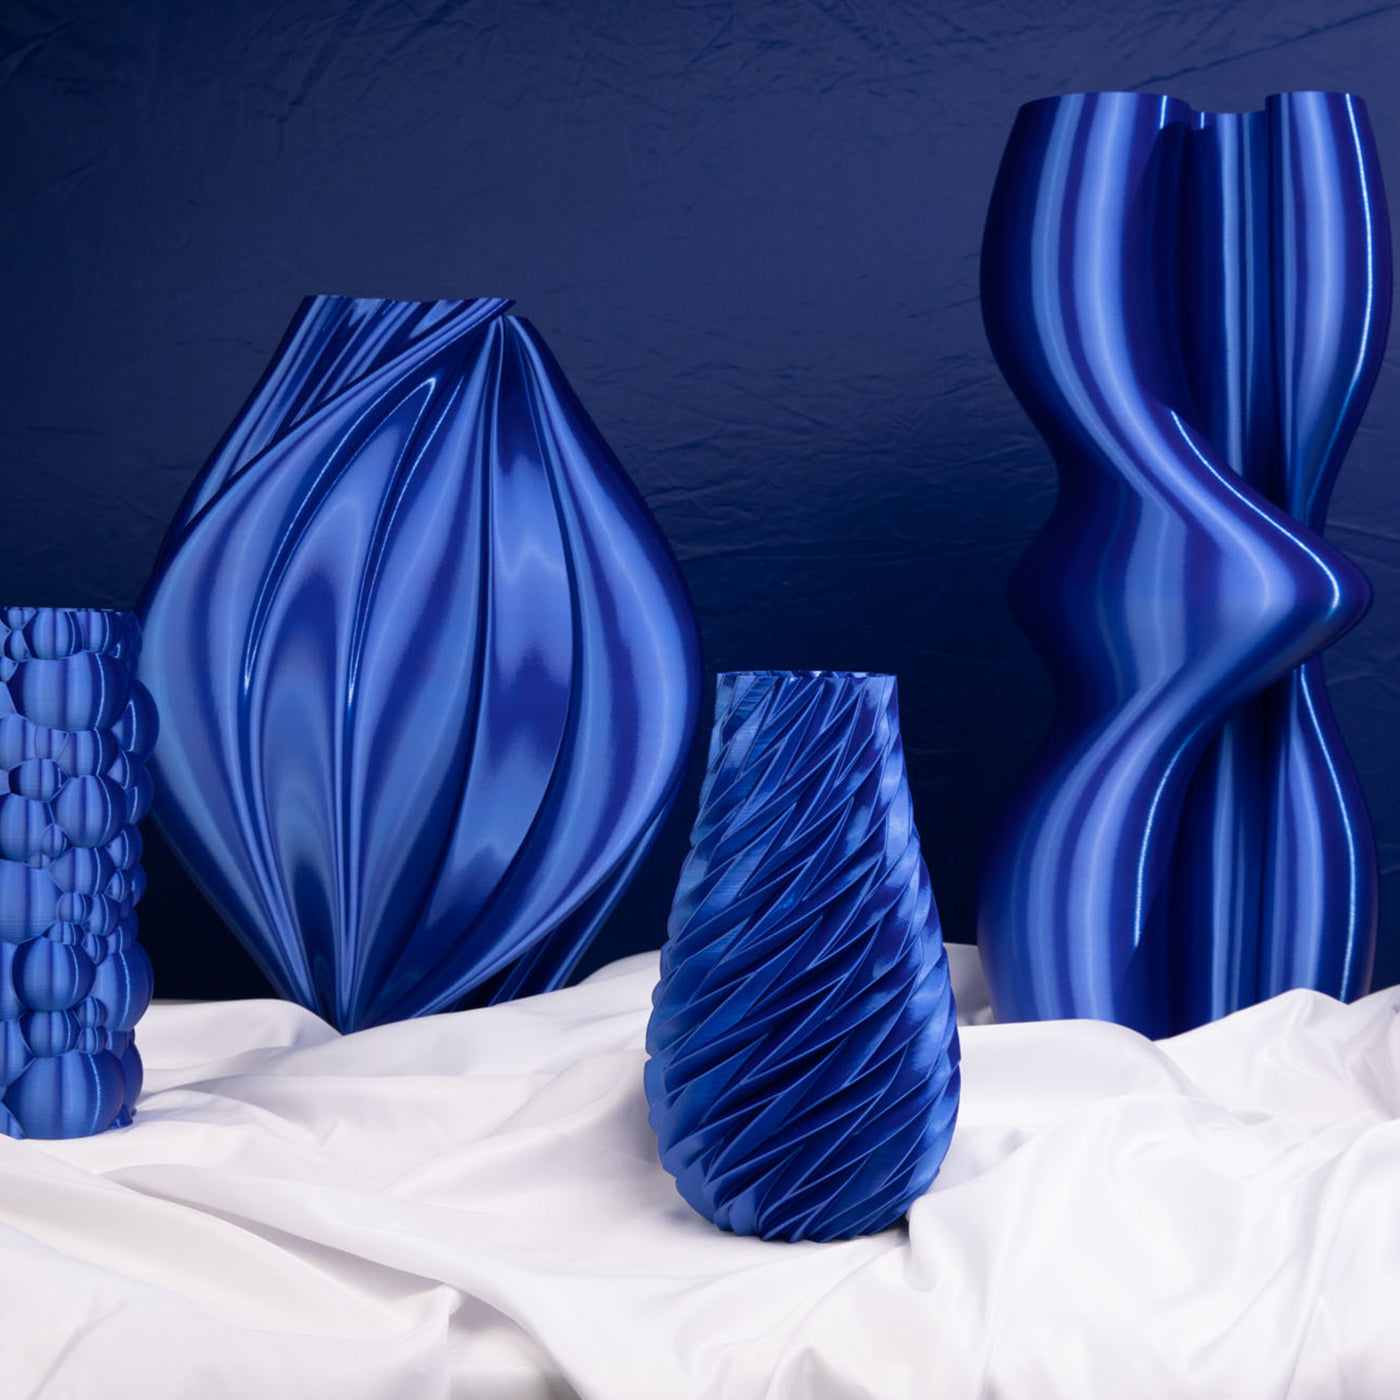 Feeling Blue Vase-Sculpture - Alternative view 1